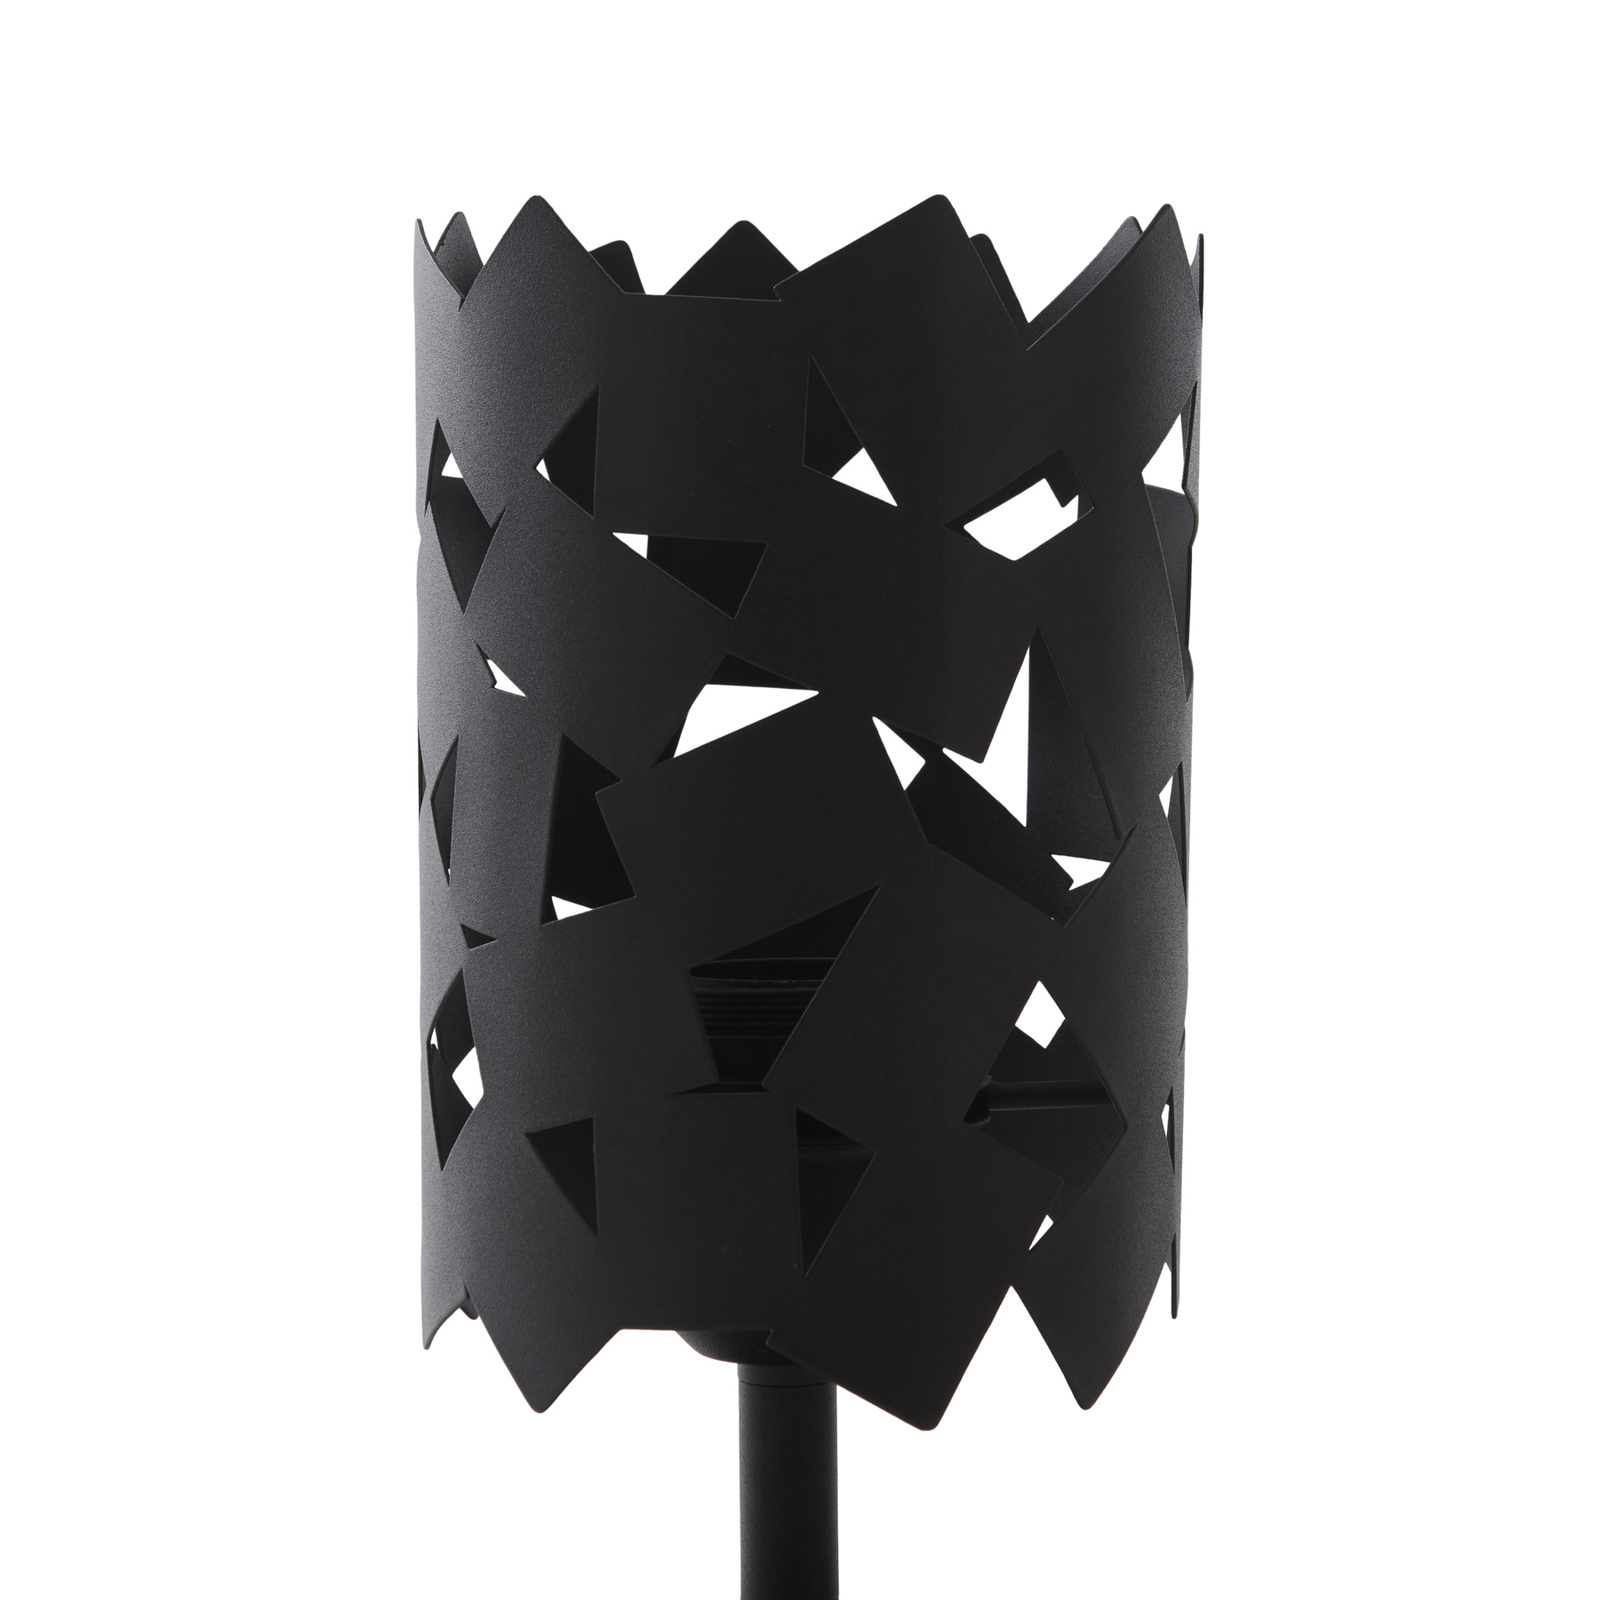 Lucande Aeloria table lamp, black, iron